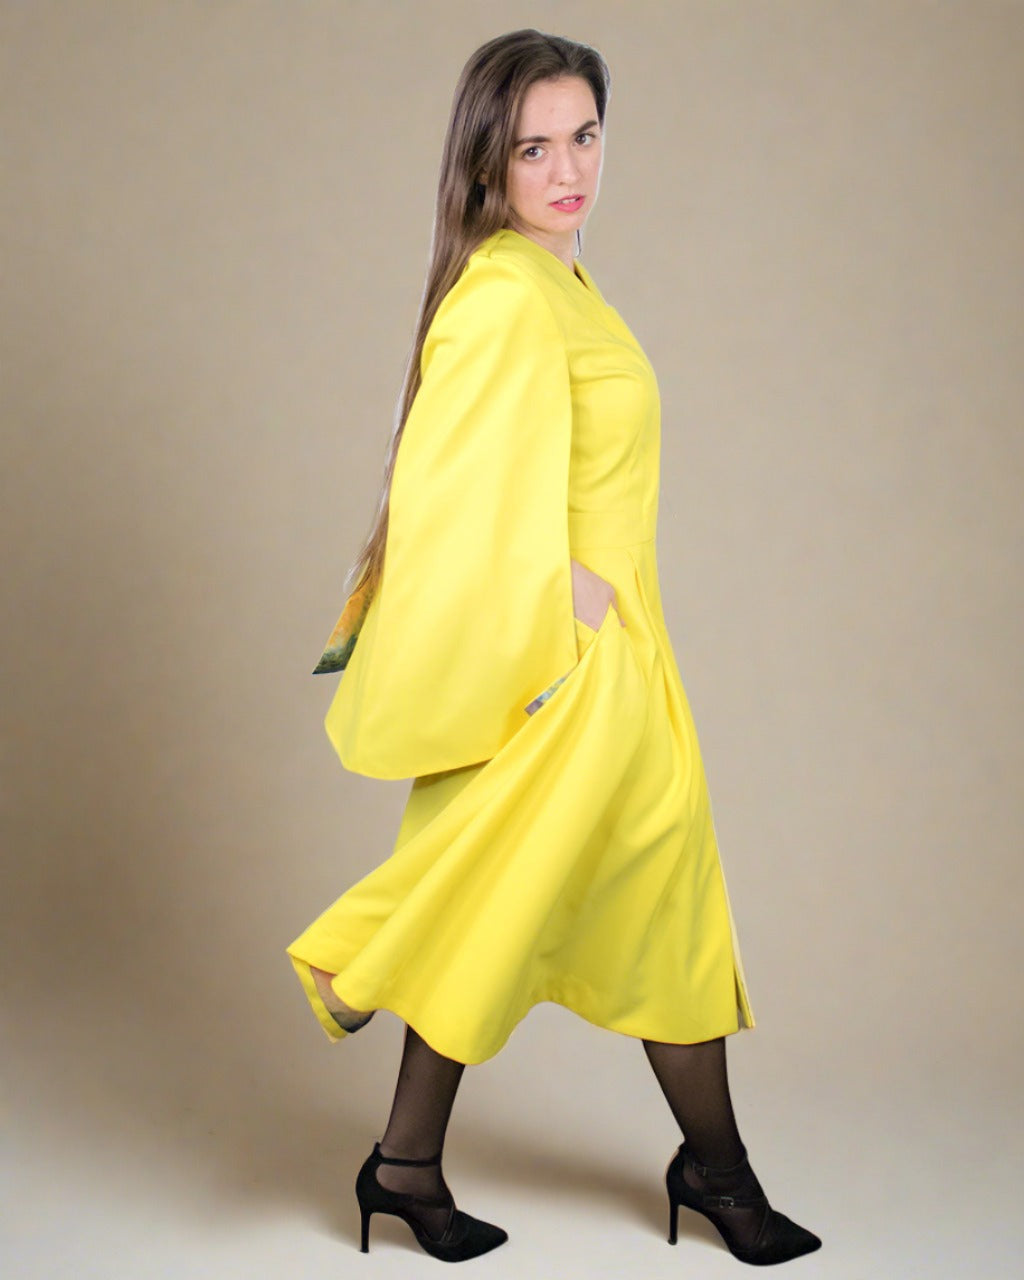 Waterproof yellow raincoat side view